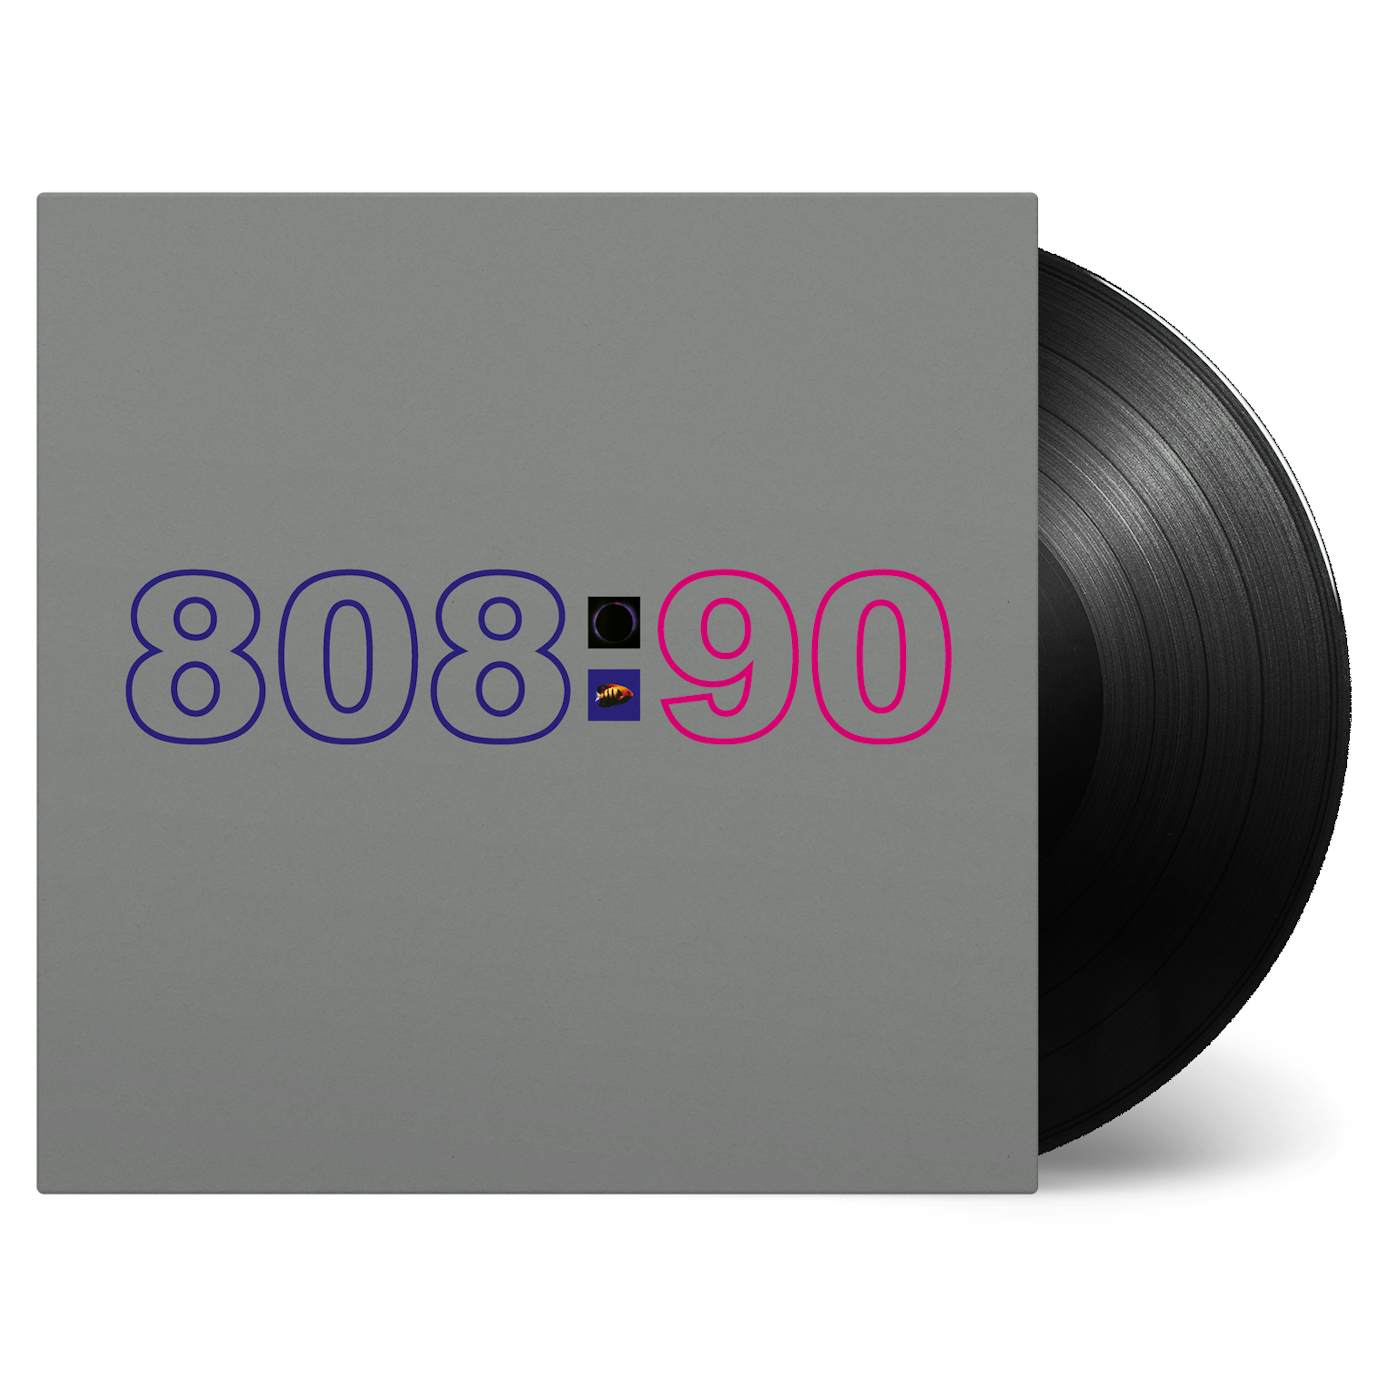 808 State 808:90 Vinyl Record